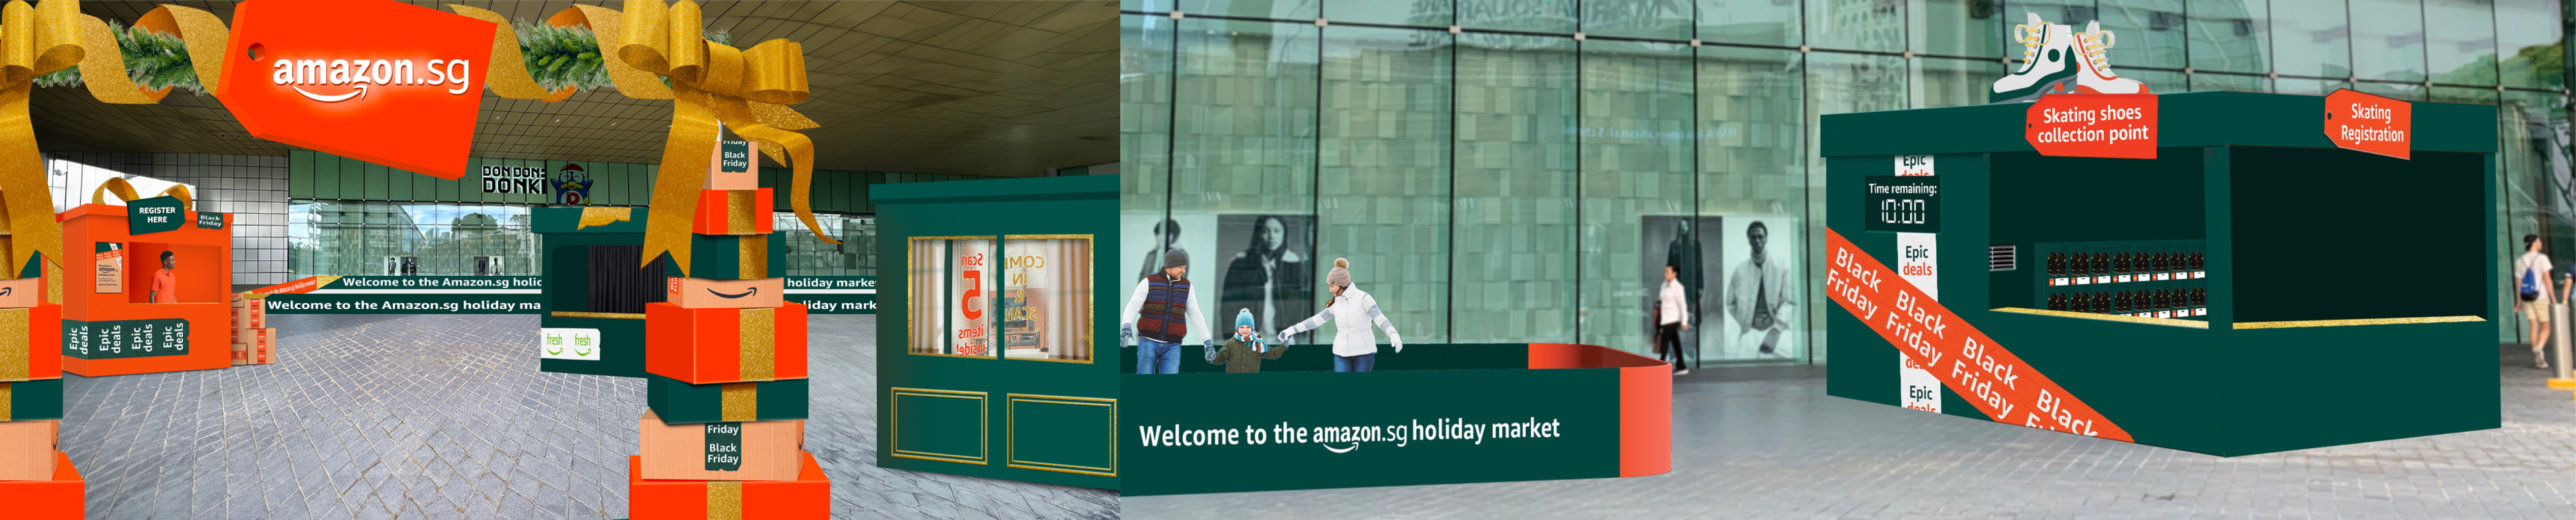 Amazon.sg holiday market event collage.jpg